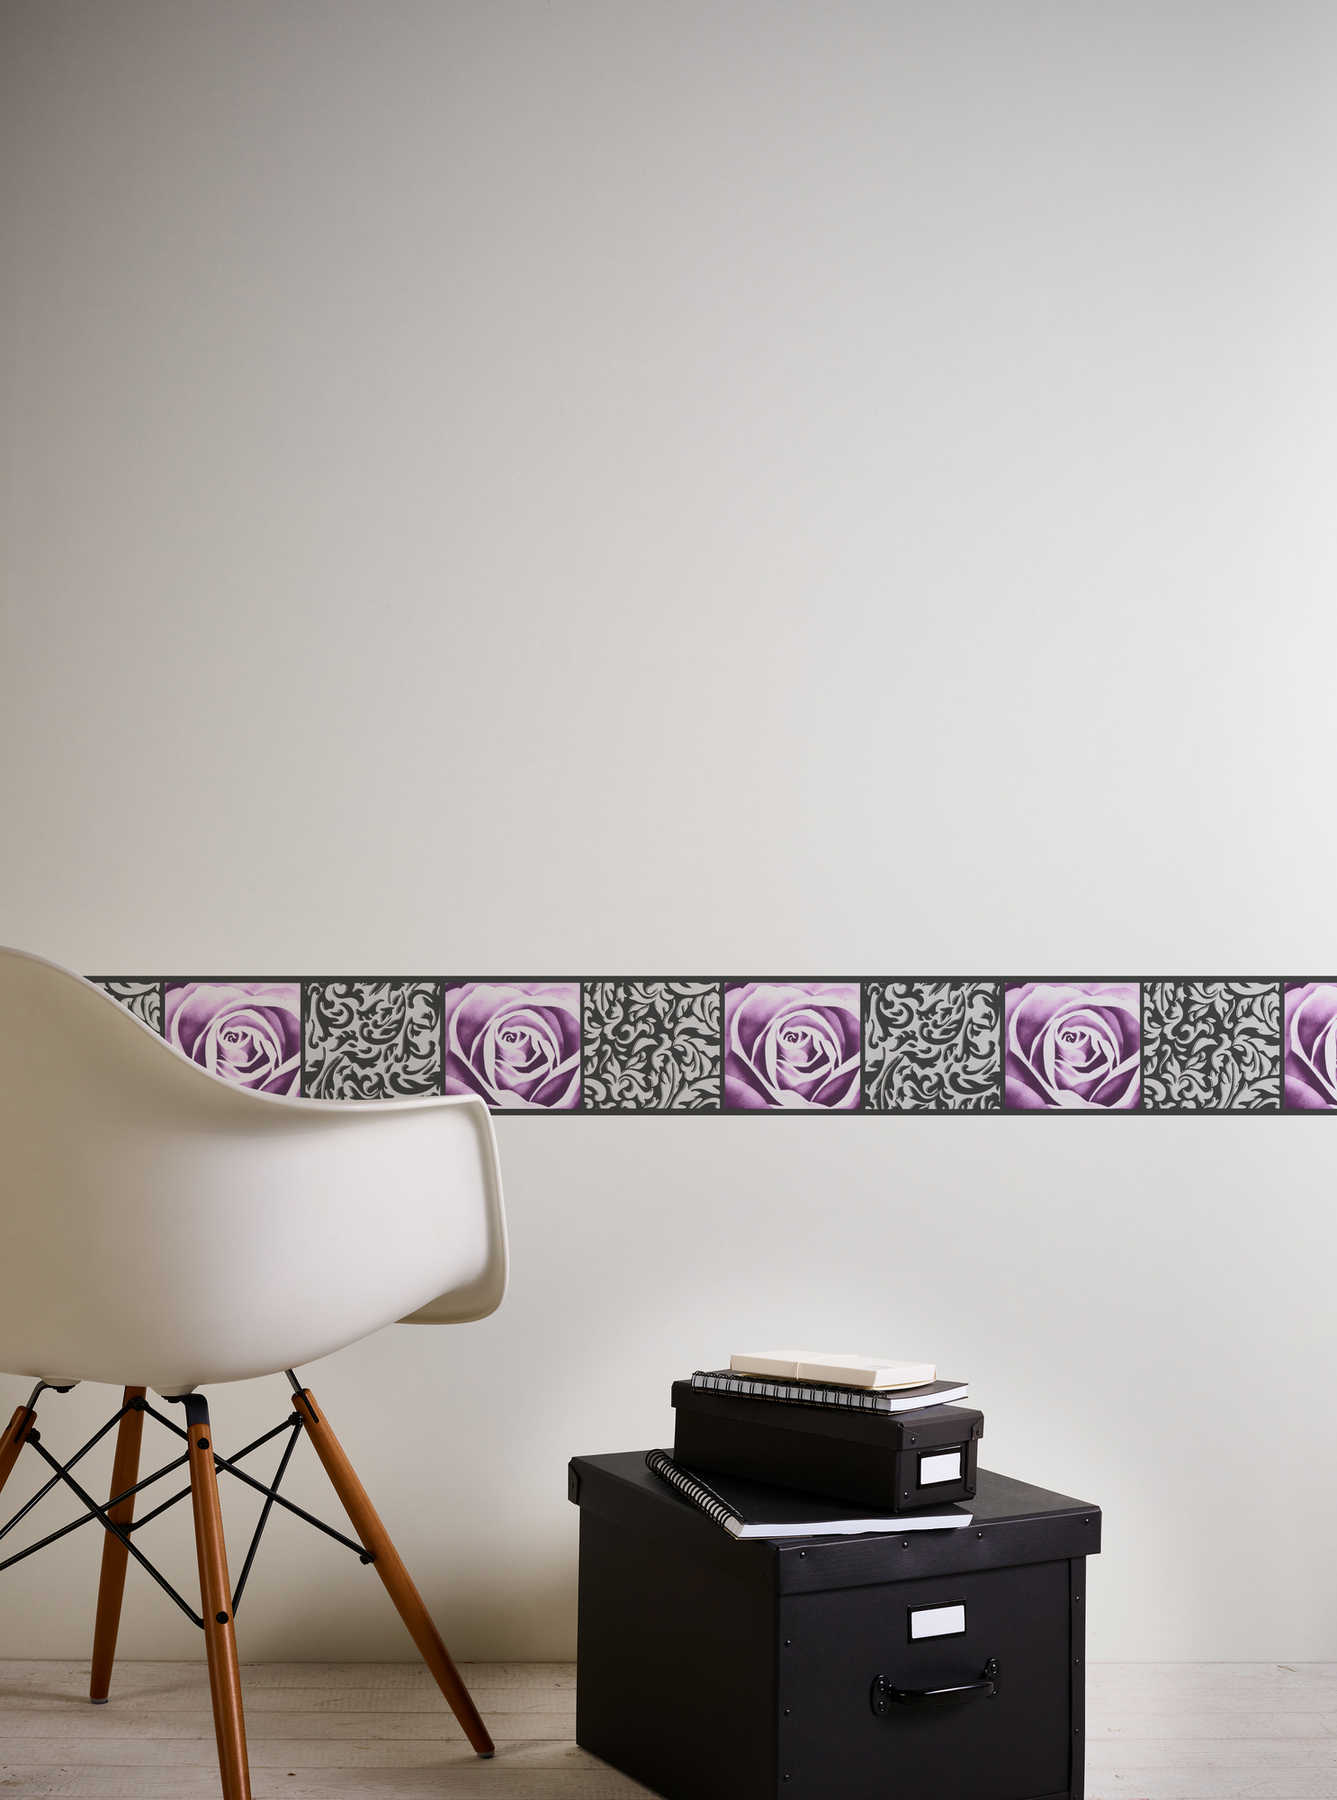             Wallpaper border with roses & ornament design - black, purple
        